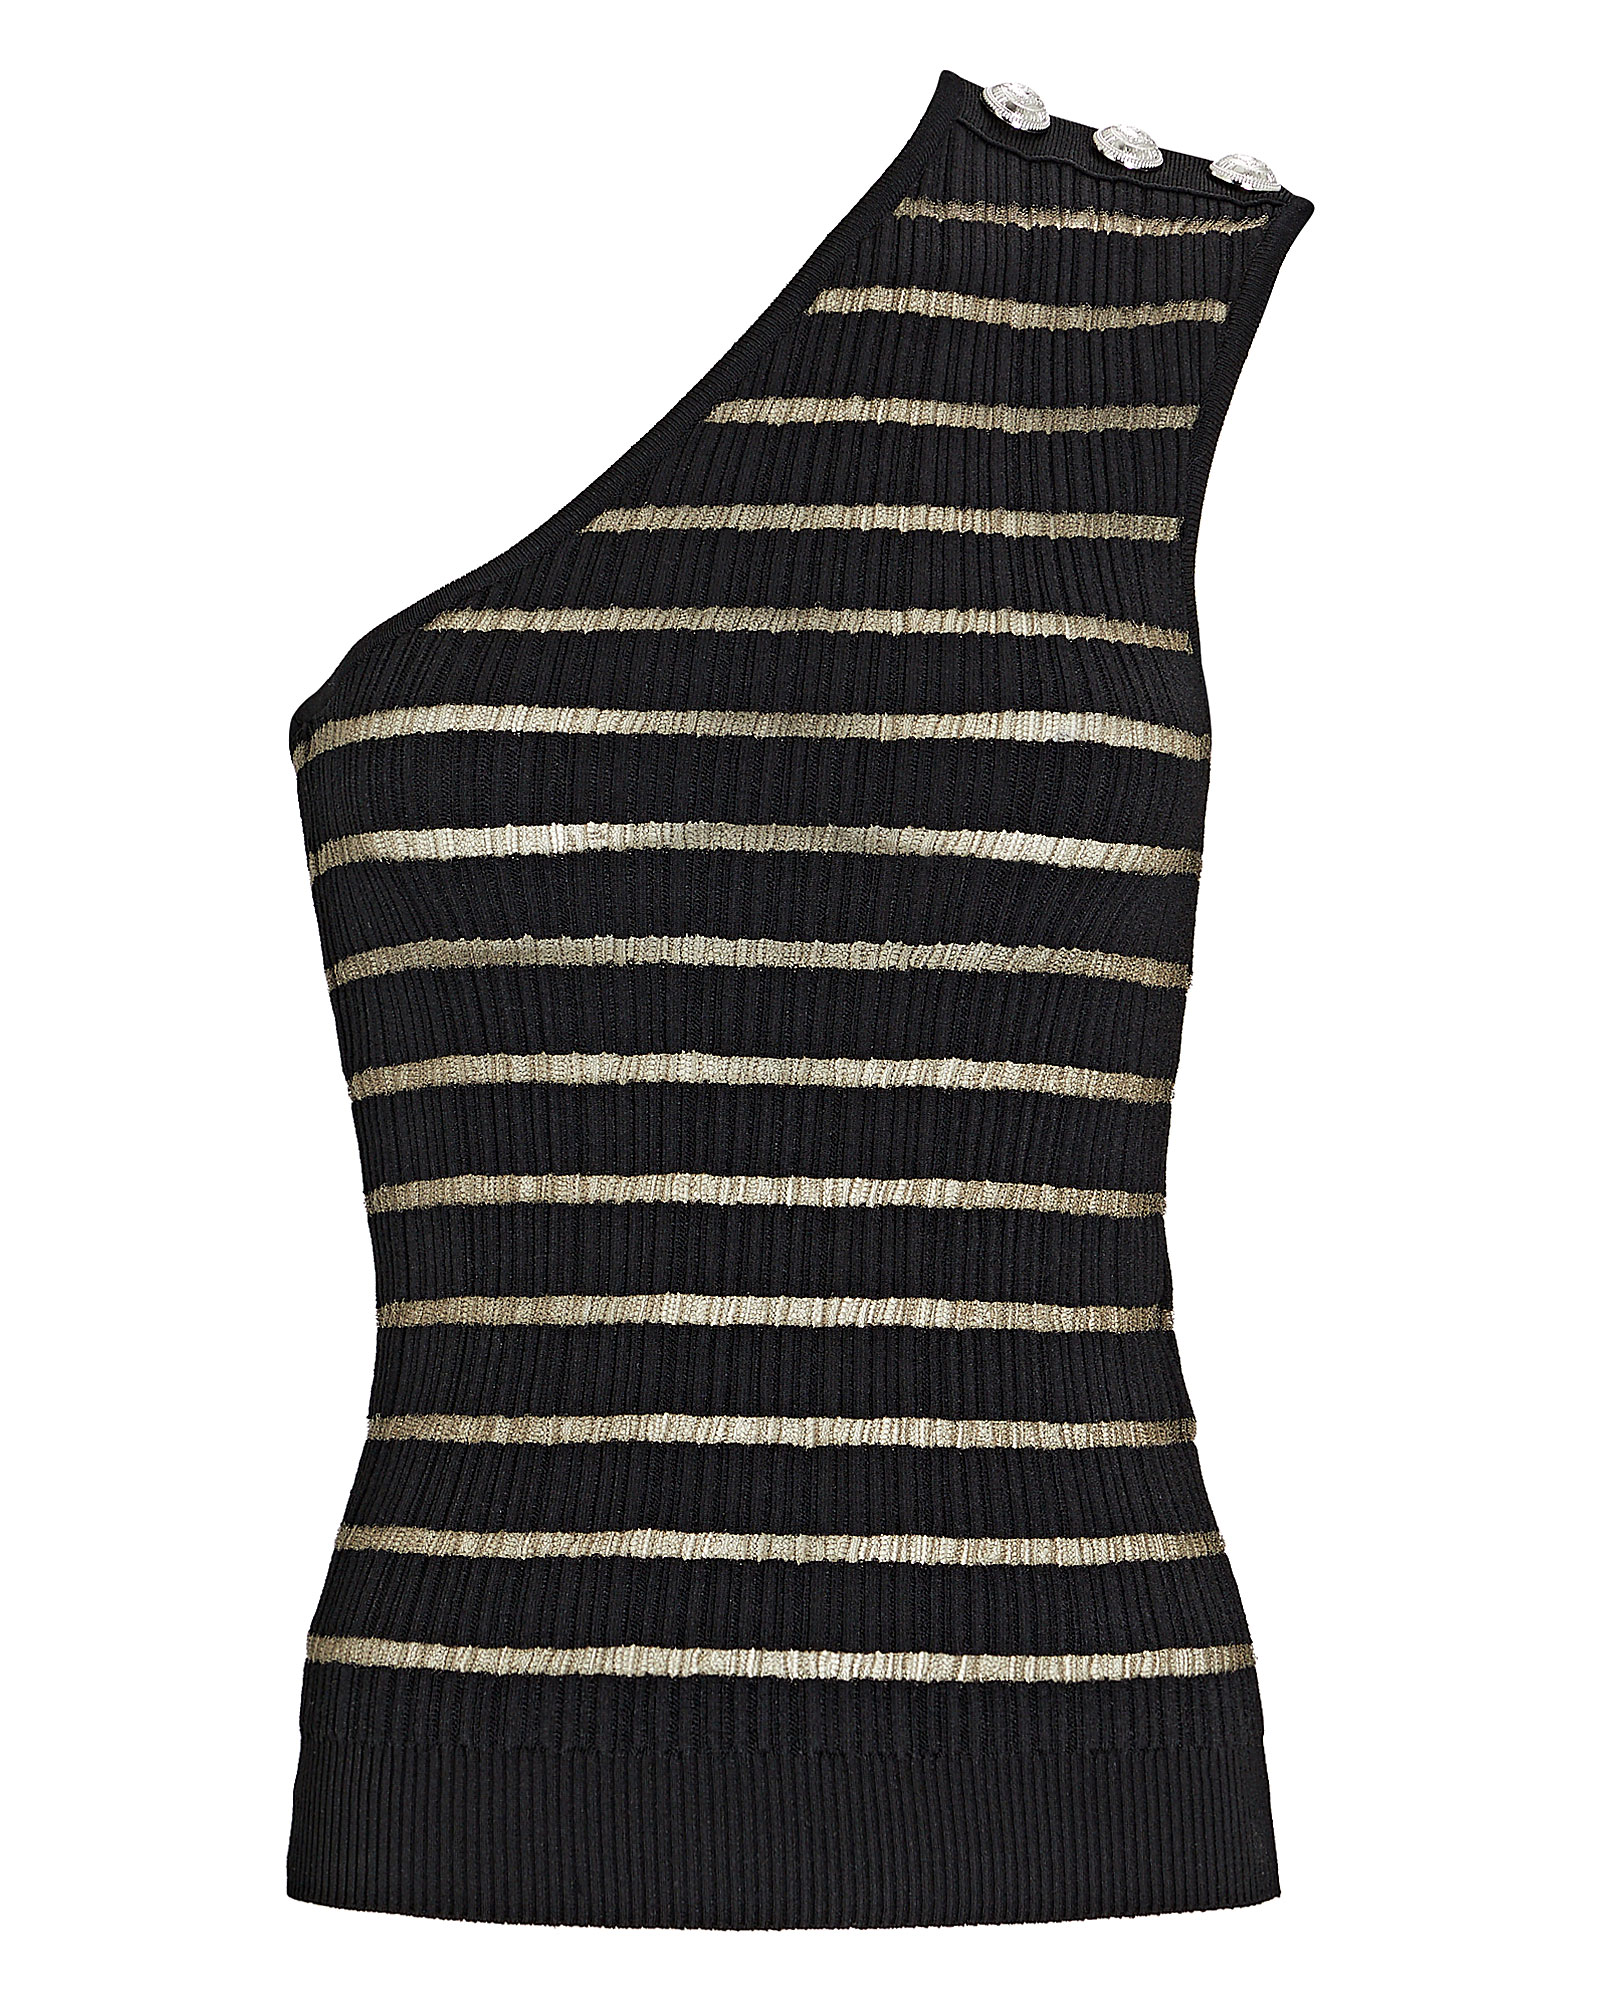 Balmain Striped One-Shoulder Knit Top | INTERMIX®